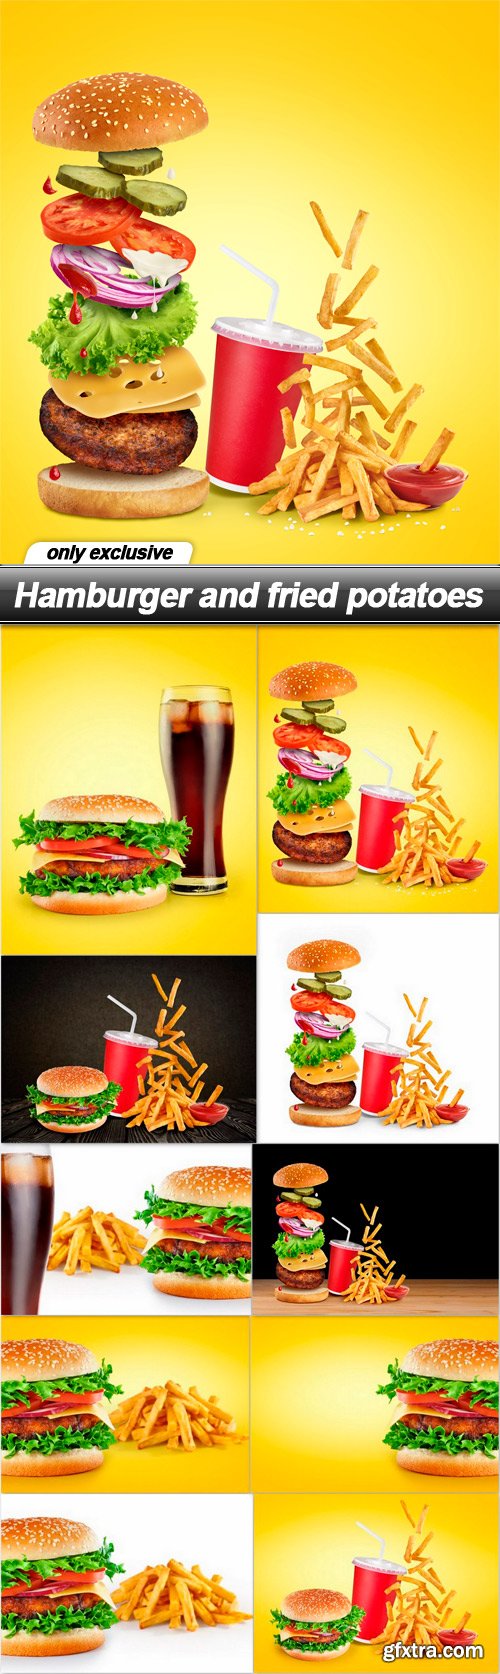 Hamburger and fried potatoes - 10 UHQ JPEG